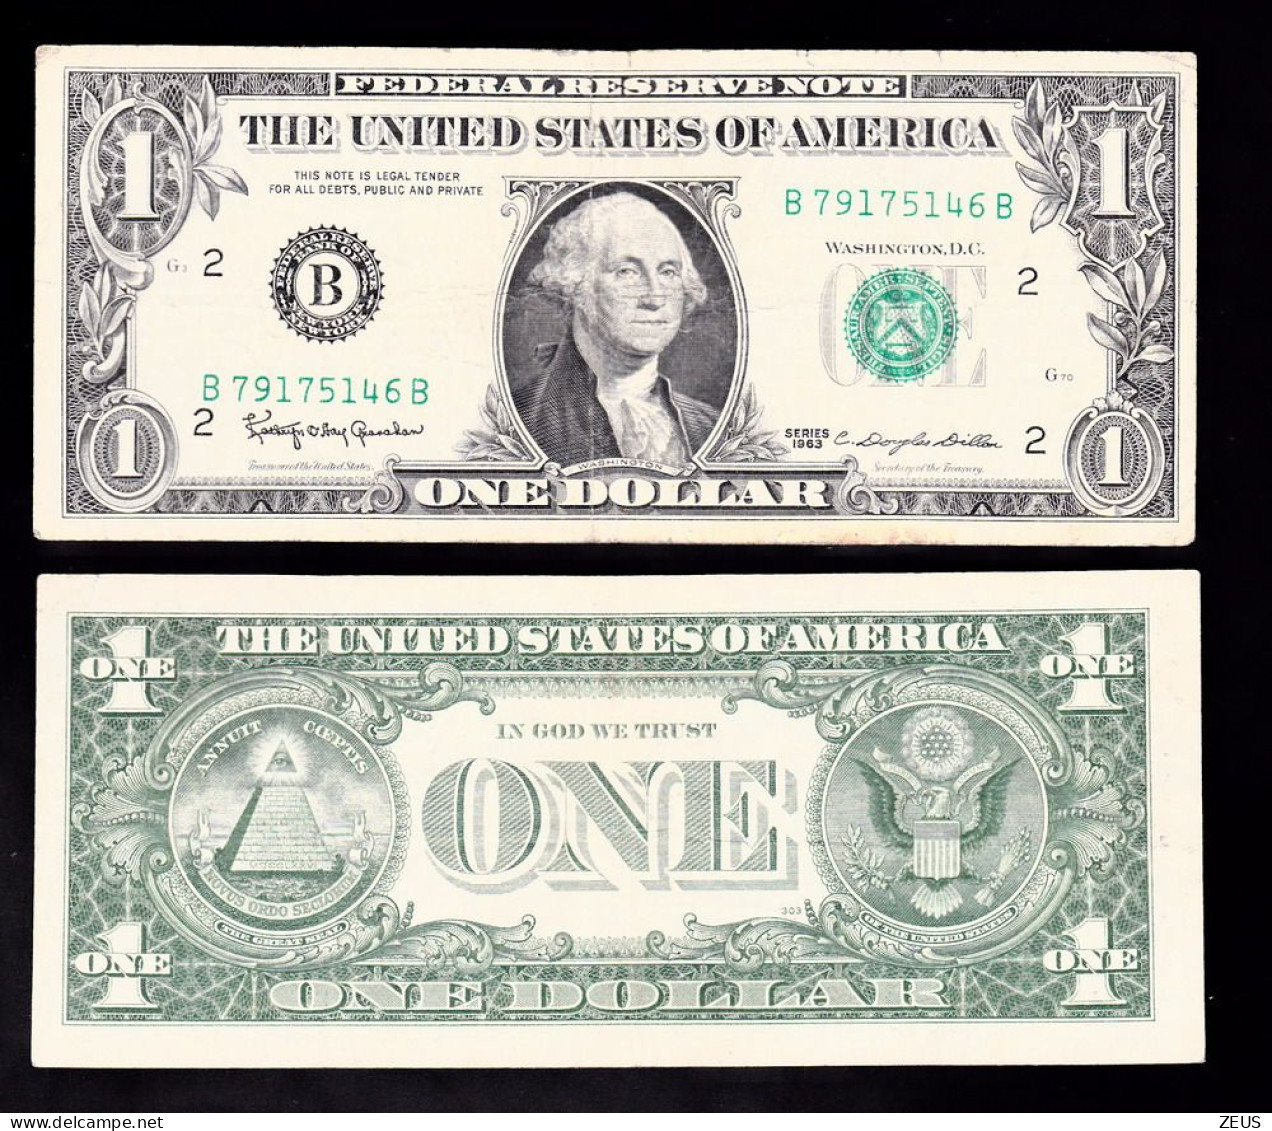 USA 1 DOLLARO 1963  PIK 443A BB - Devise Nationale